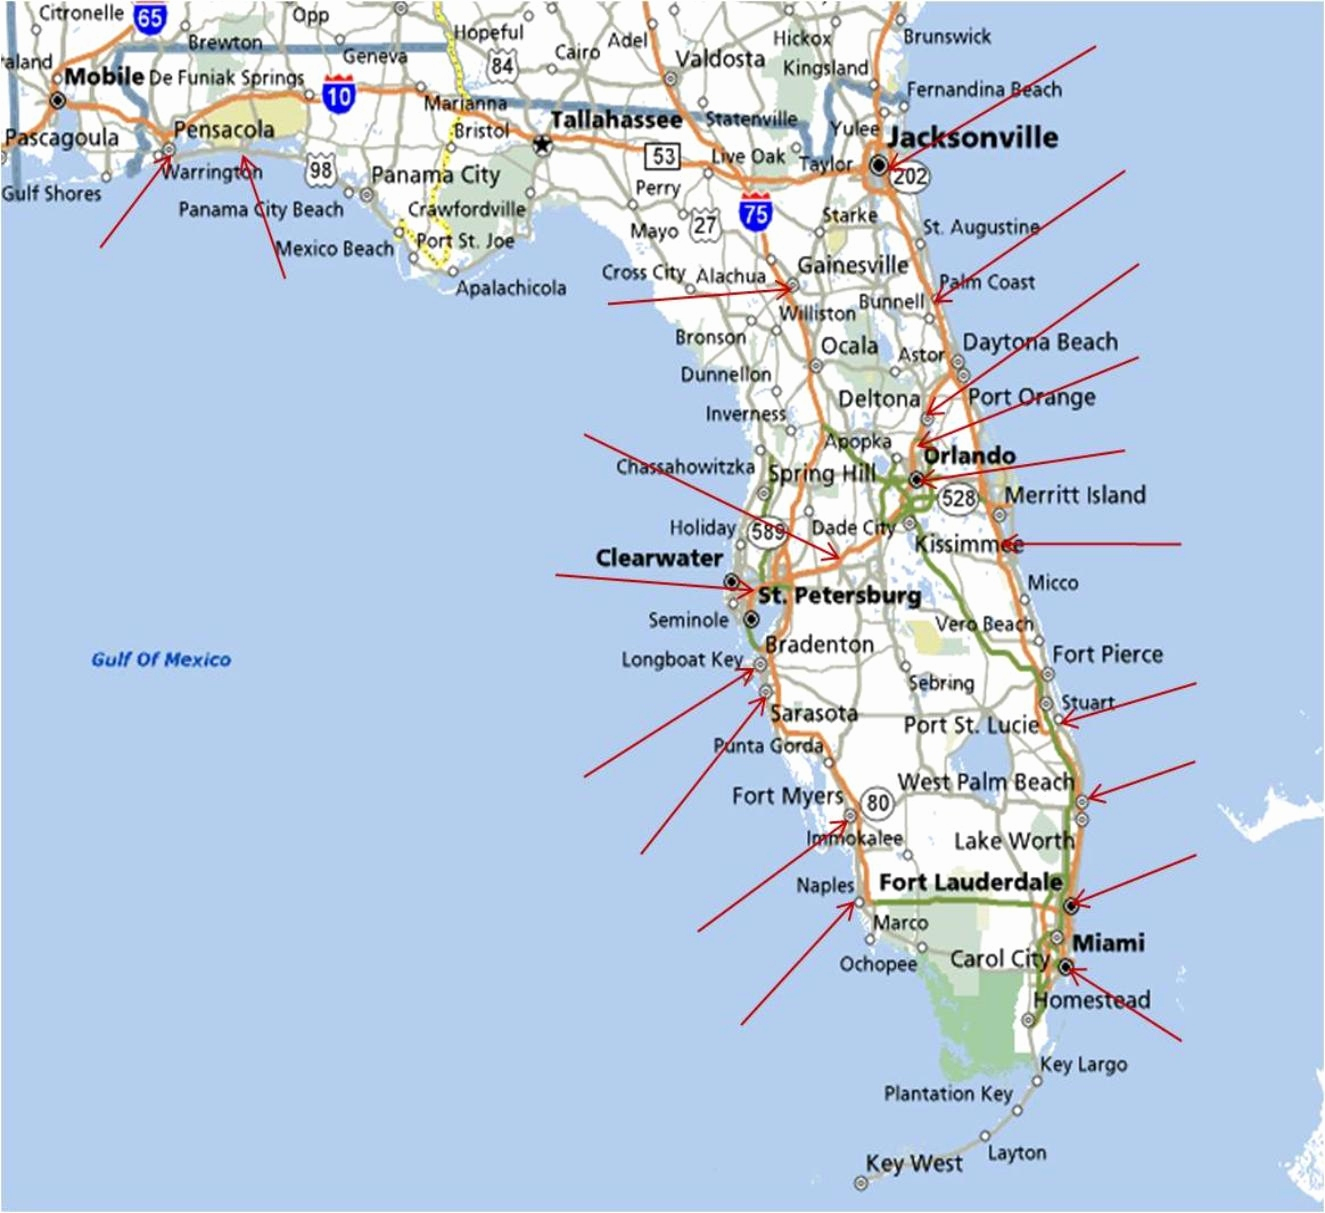 Best East Coast Florida Beaches New Map Florida West Coast Florida - Best Beaches Gulf Coast Florida Map